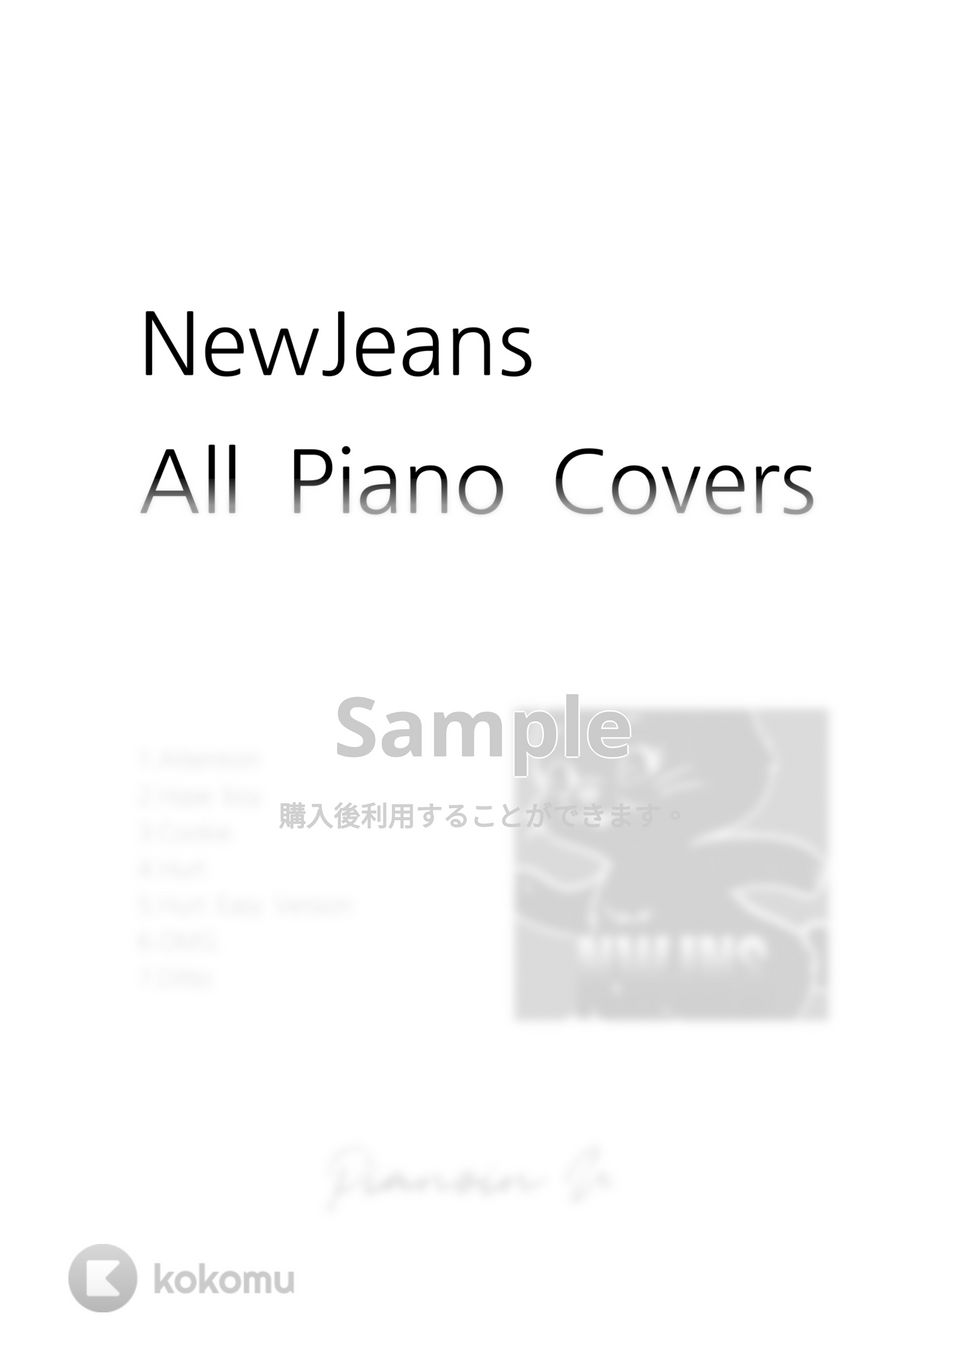 New Jeans 7曲メドレー by PIANOiNU